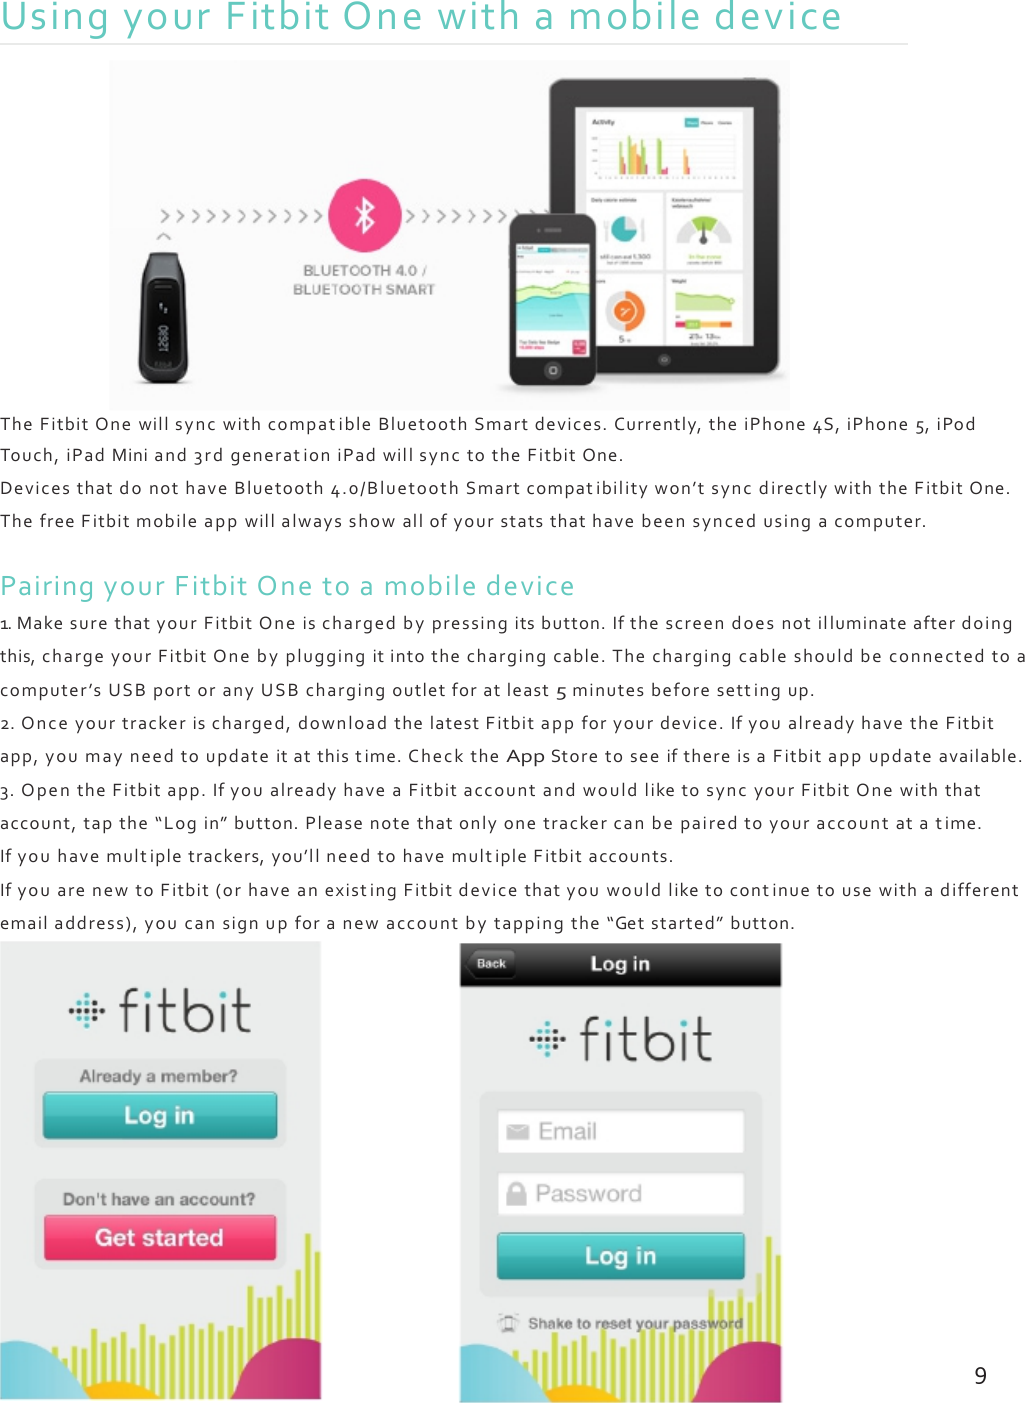 Fitbit FB103 Wireless Activity Sleep Tracker User Manual ...